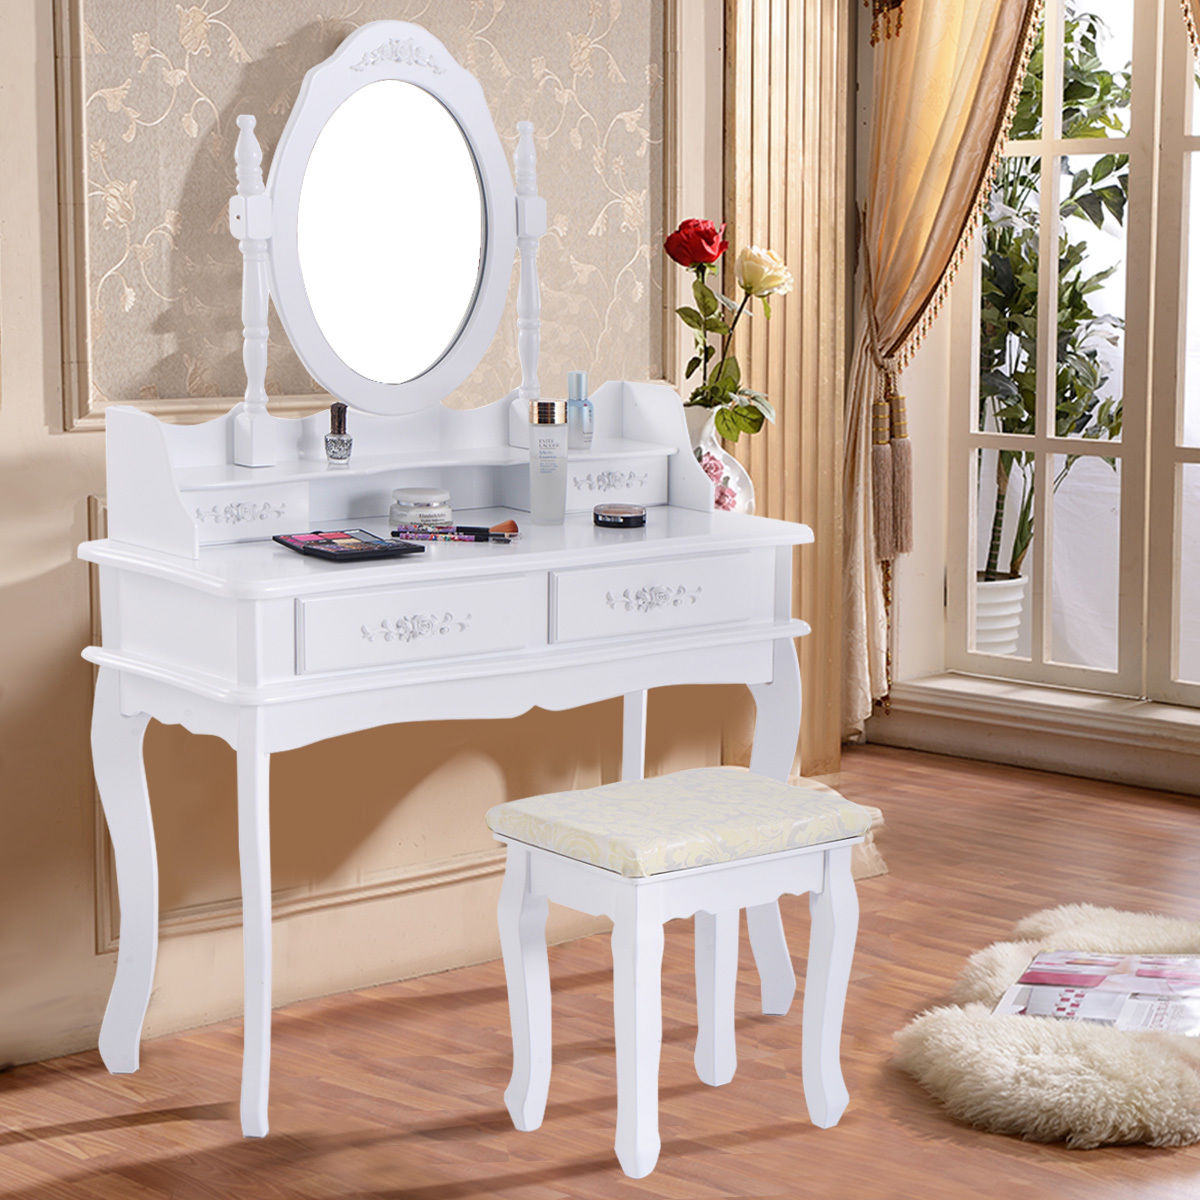 Costway White Vanity Makeup Dressing Table Set Mirror Jewelry Storage Wstool 4 Drawer throughout sizing 1200 X 1200